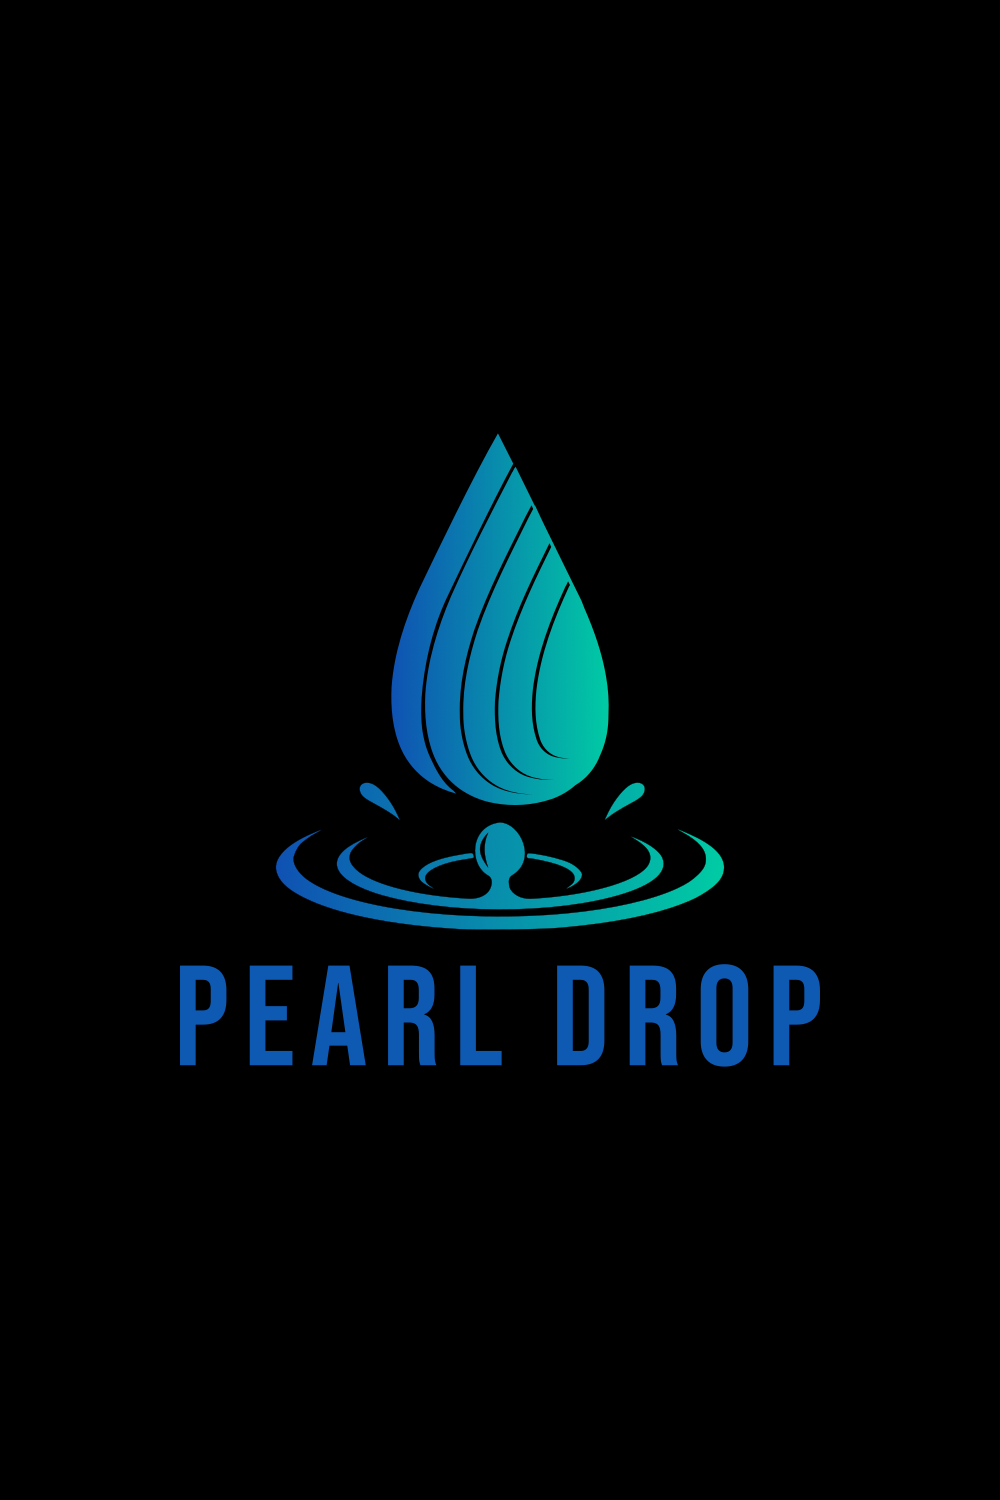 Pearl Drop Creative Design Logo pinterest image.